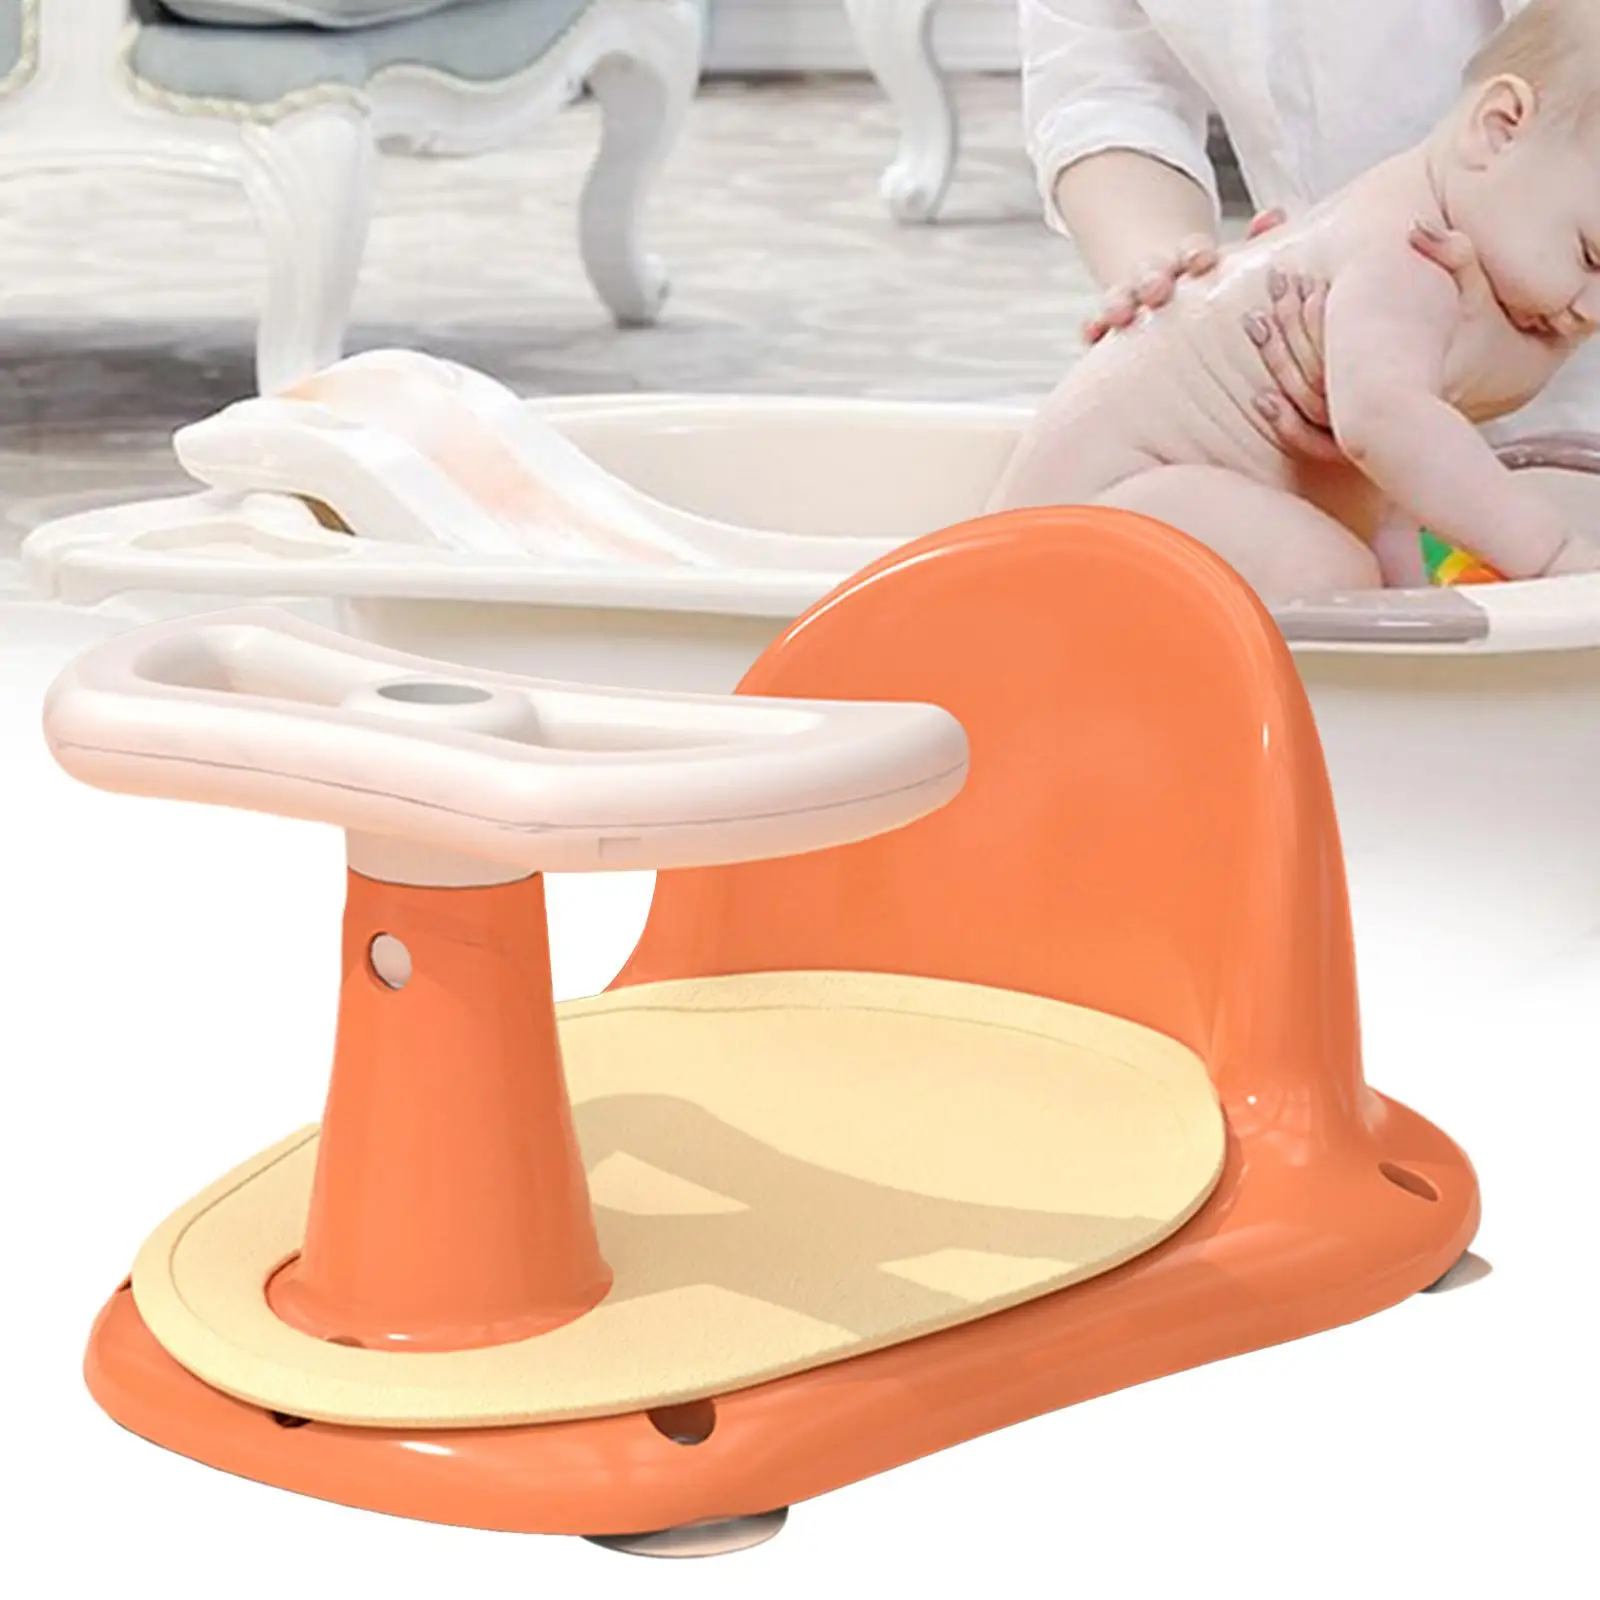 Cute Bathtub Seat Tub Sitting up Suction with Anti Slip Mat Bath Seat Support Steering Wheel Design for Baby Newborn 6-18 Months